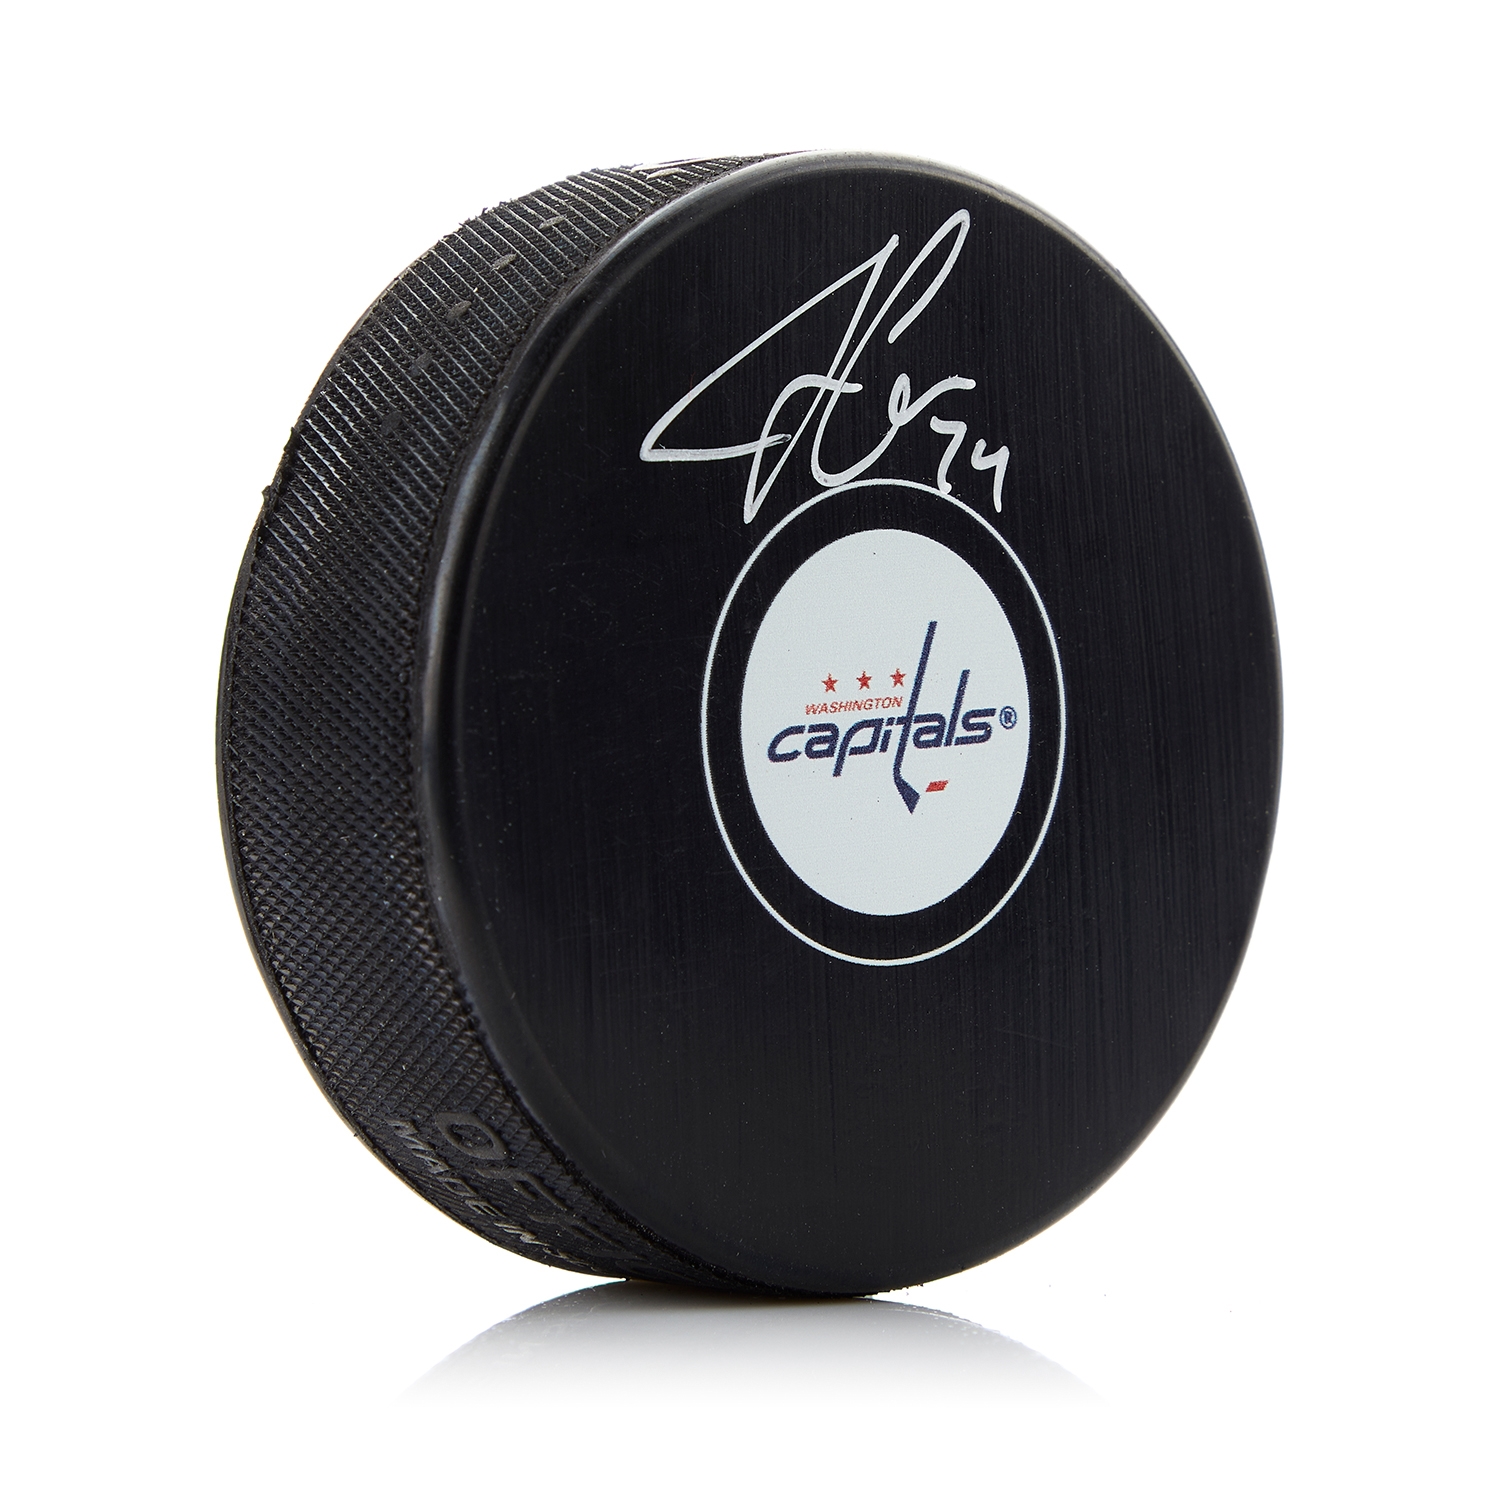 John Carlson Washington Capitals Autographed Hockey Puck